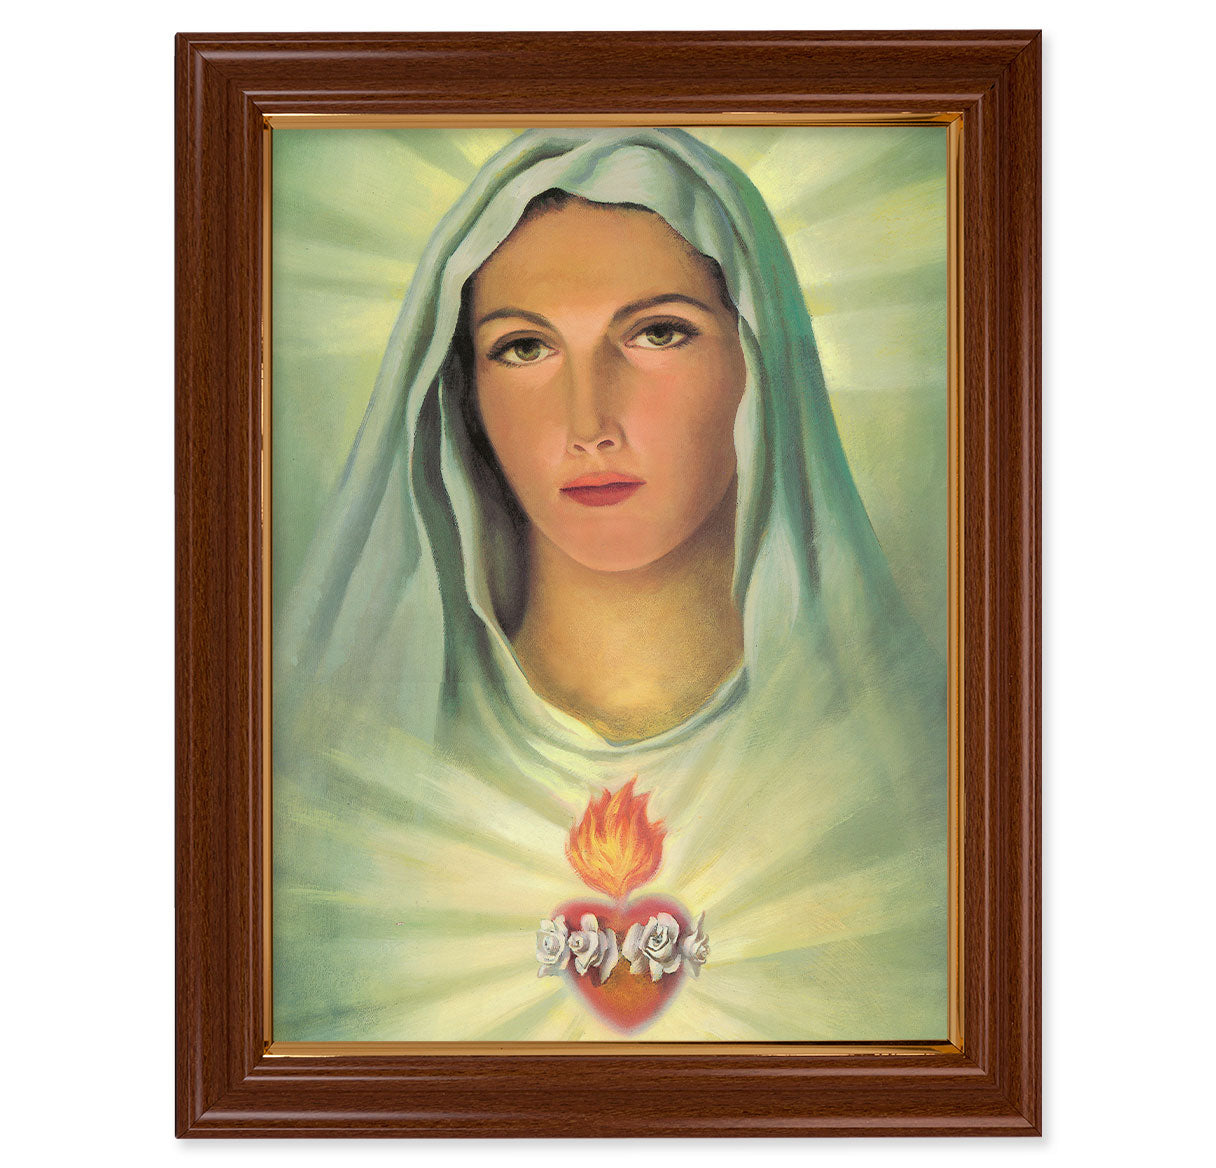 Immaculate Heart of Mary Walnut Finish Framed Art